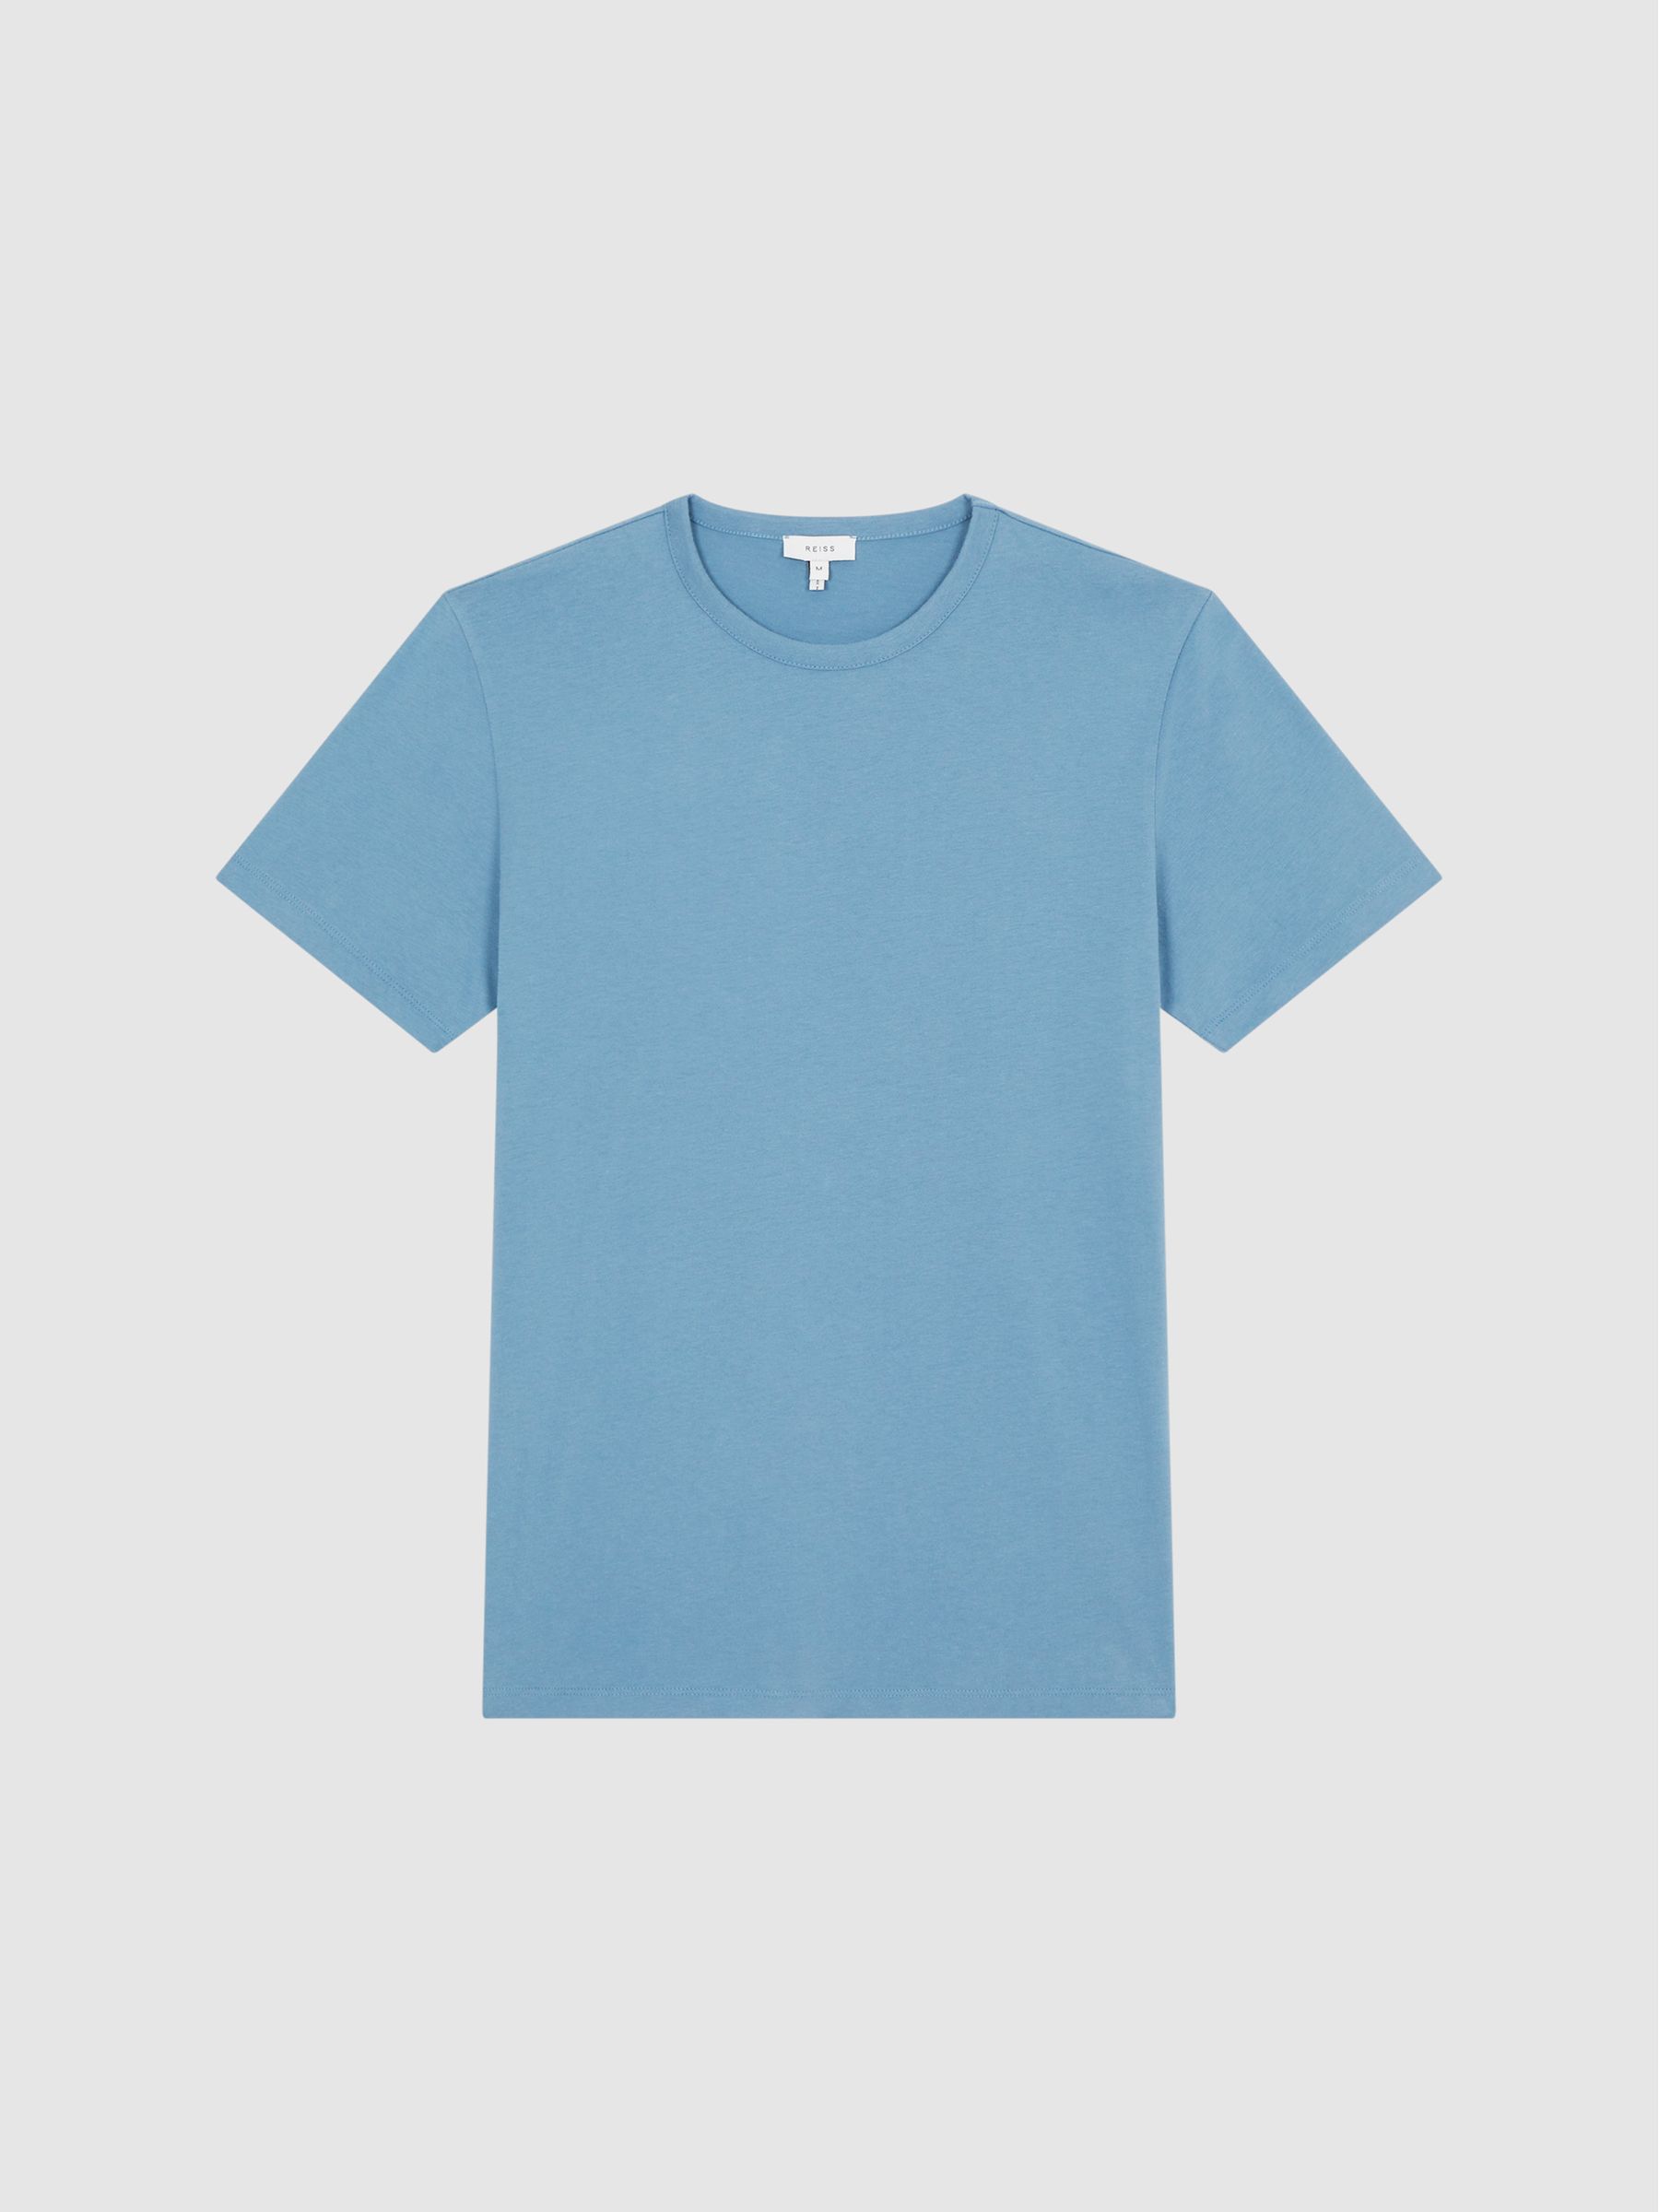 Reiss Melrose Garment Dye Crew Neck T-shirt - REISS